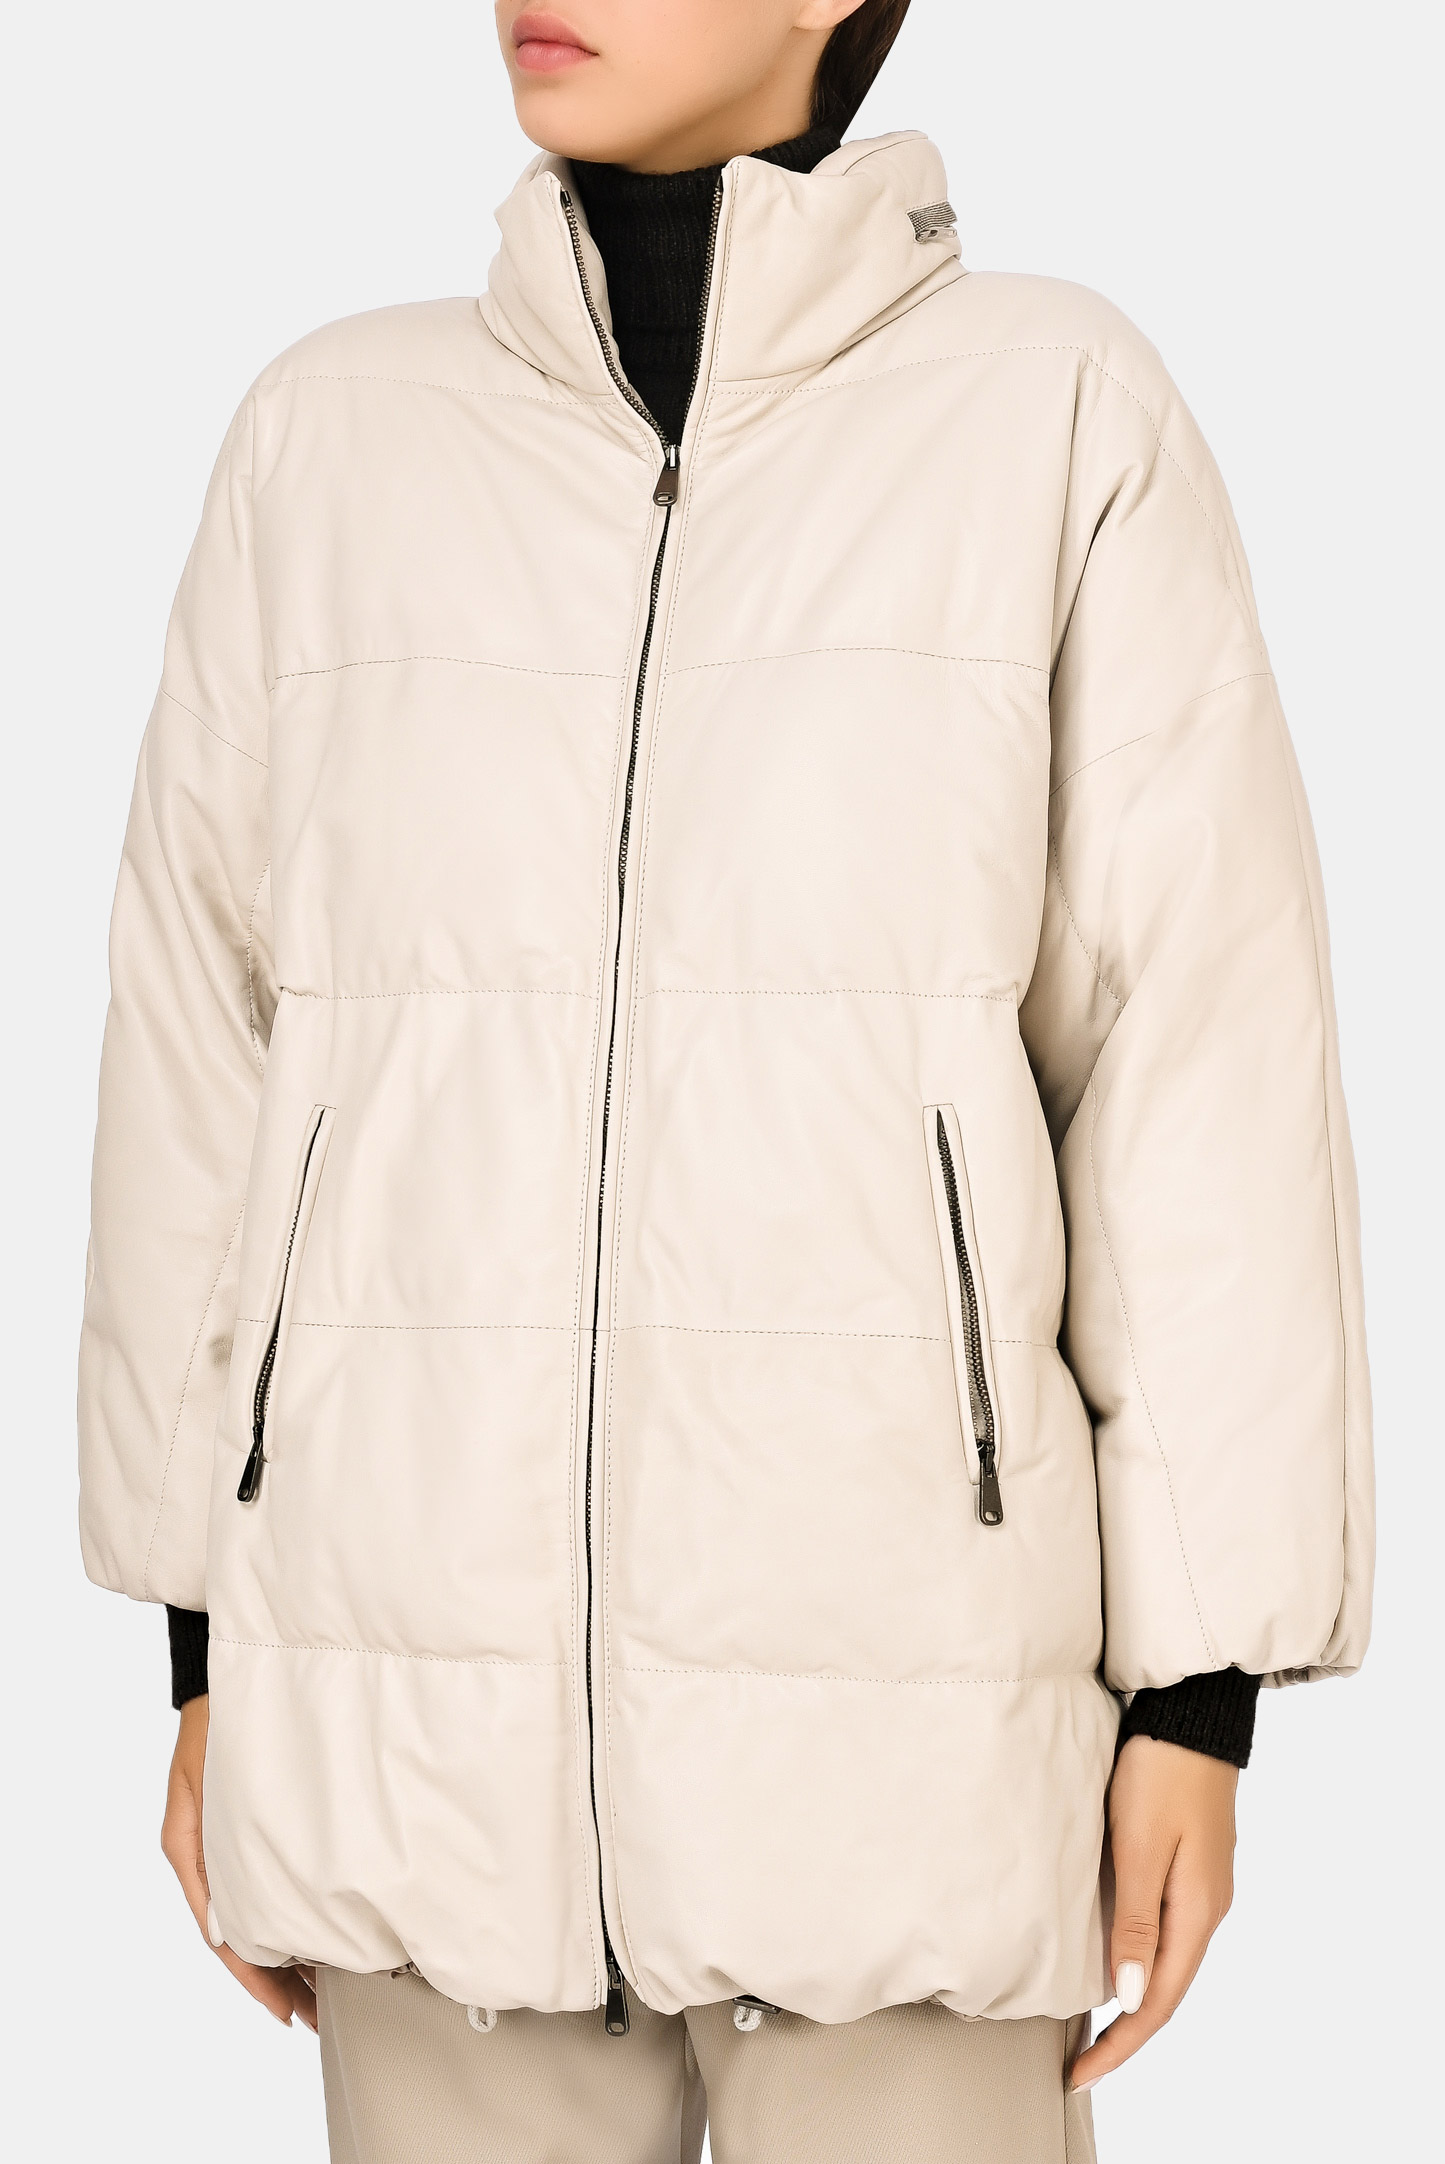 Куртка BRUNELLO  CUCINELLI MPTAN2781, цвет: Молочный, Женский